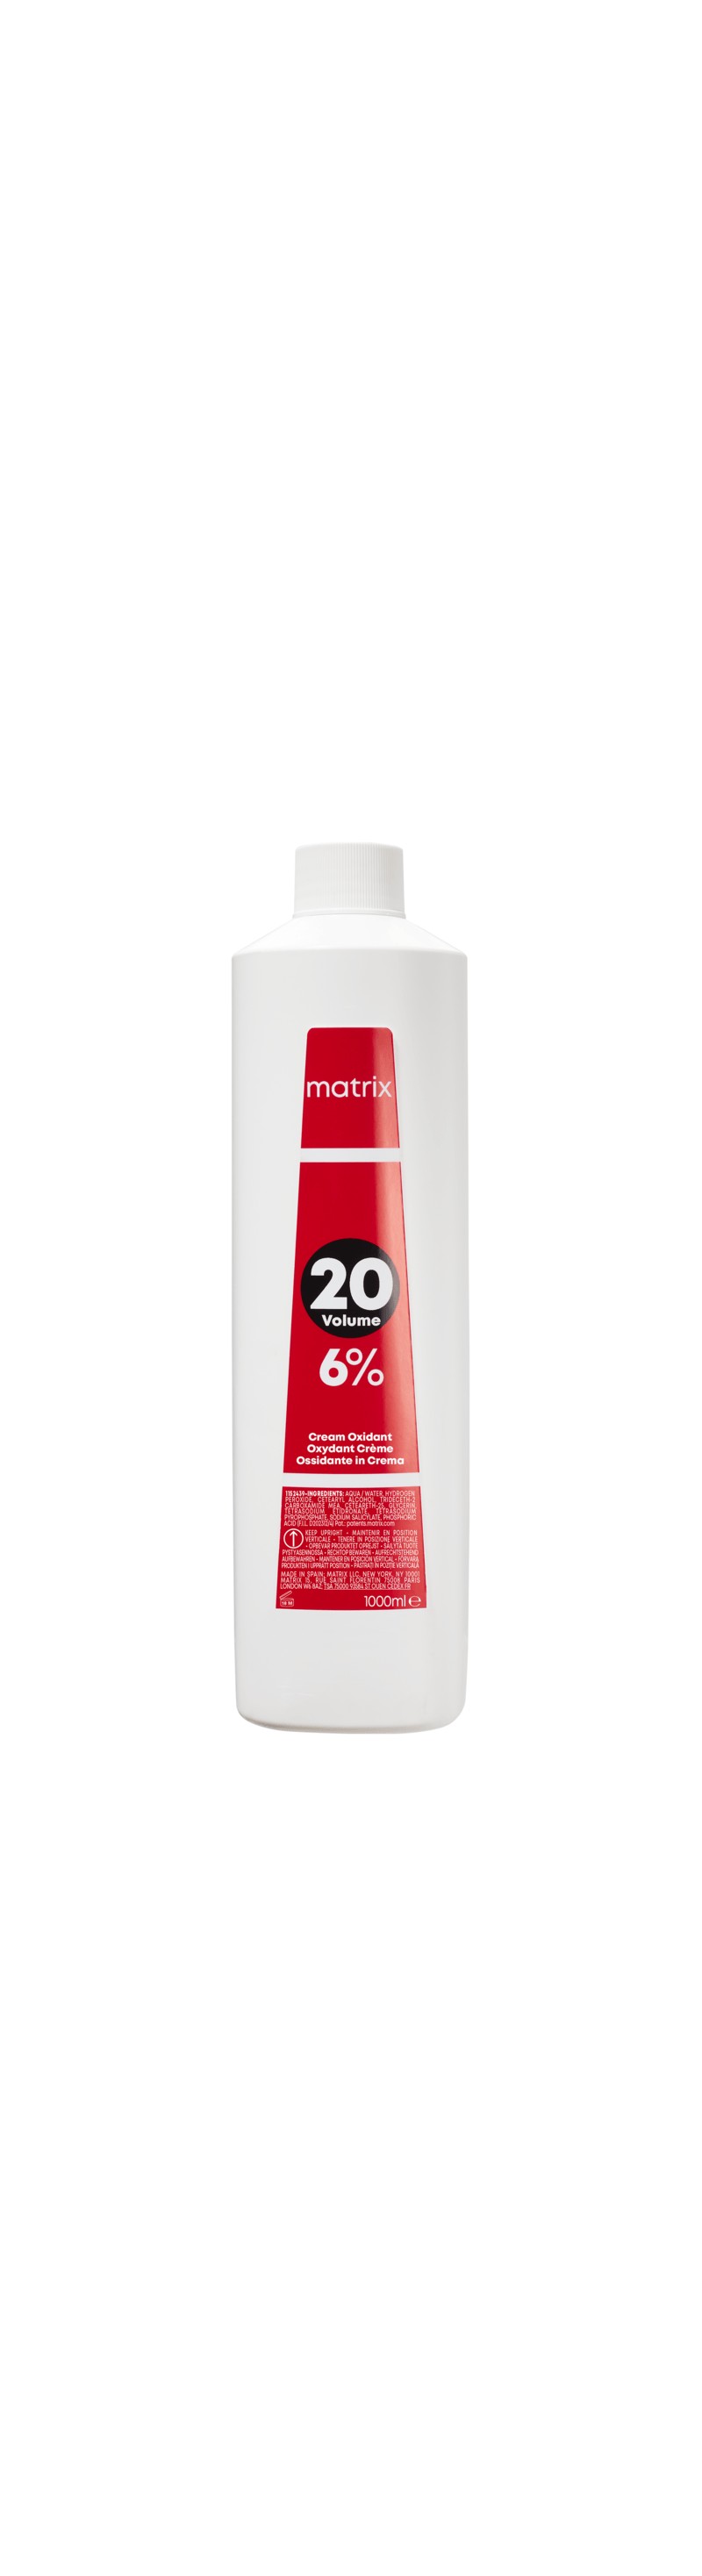 Matrix Socolor Beauty Creme Oxydant - 20 VOL - Oxidant 6% - 1000ml